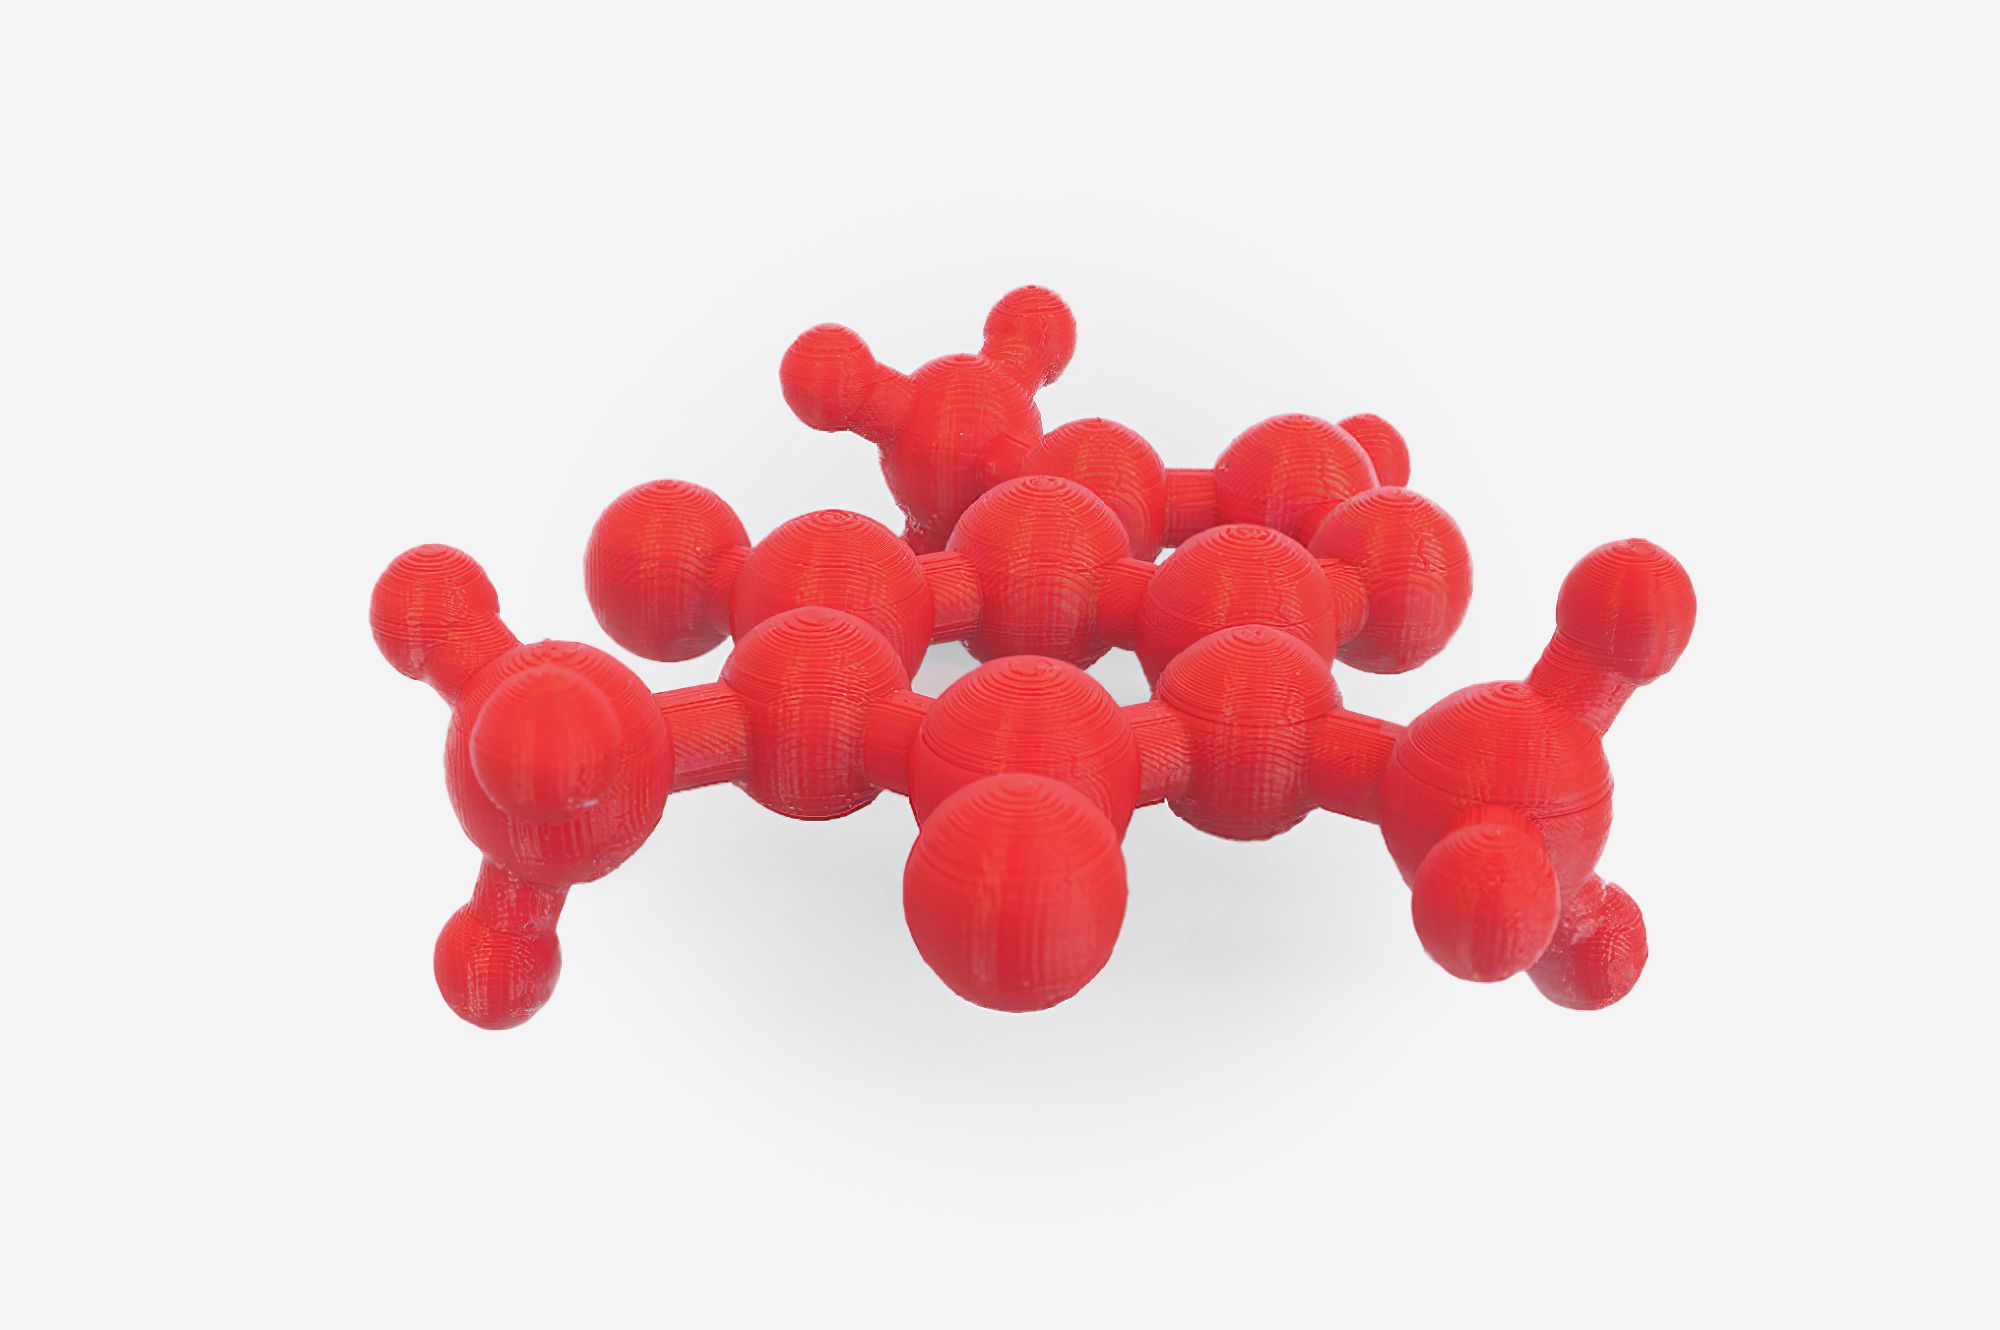 Model molecule 3d printed using ABS filament